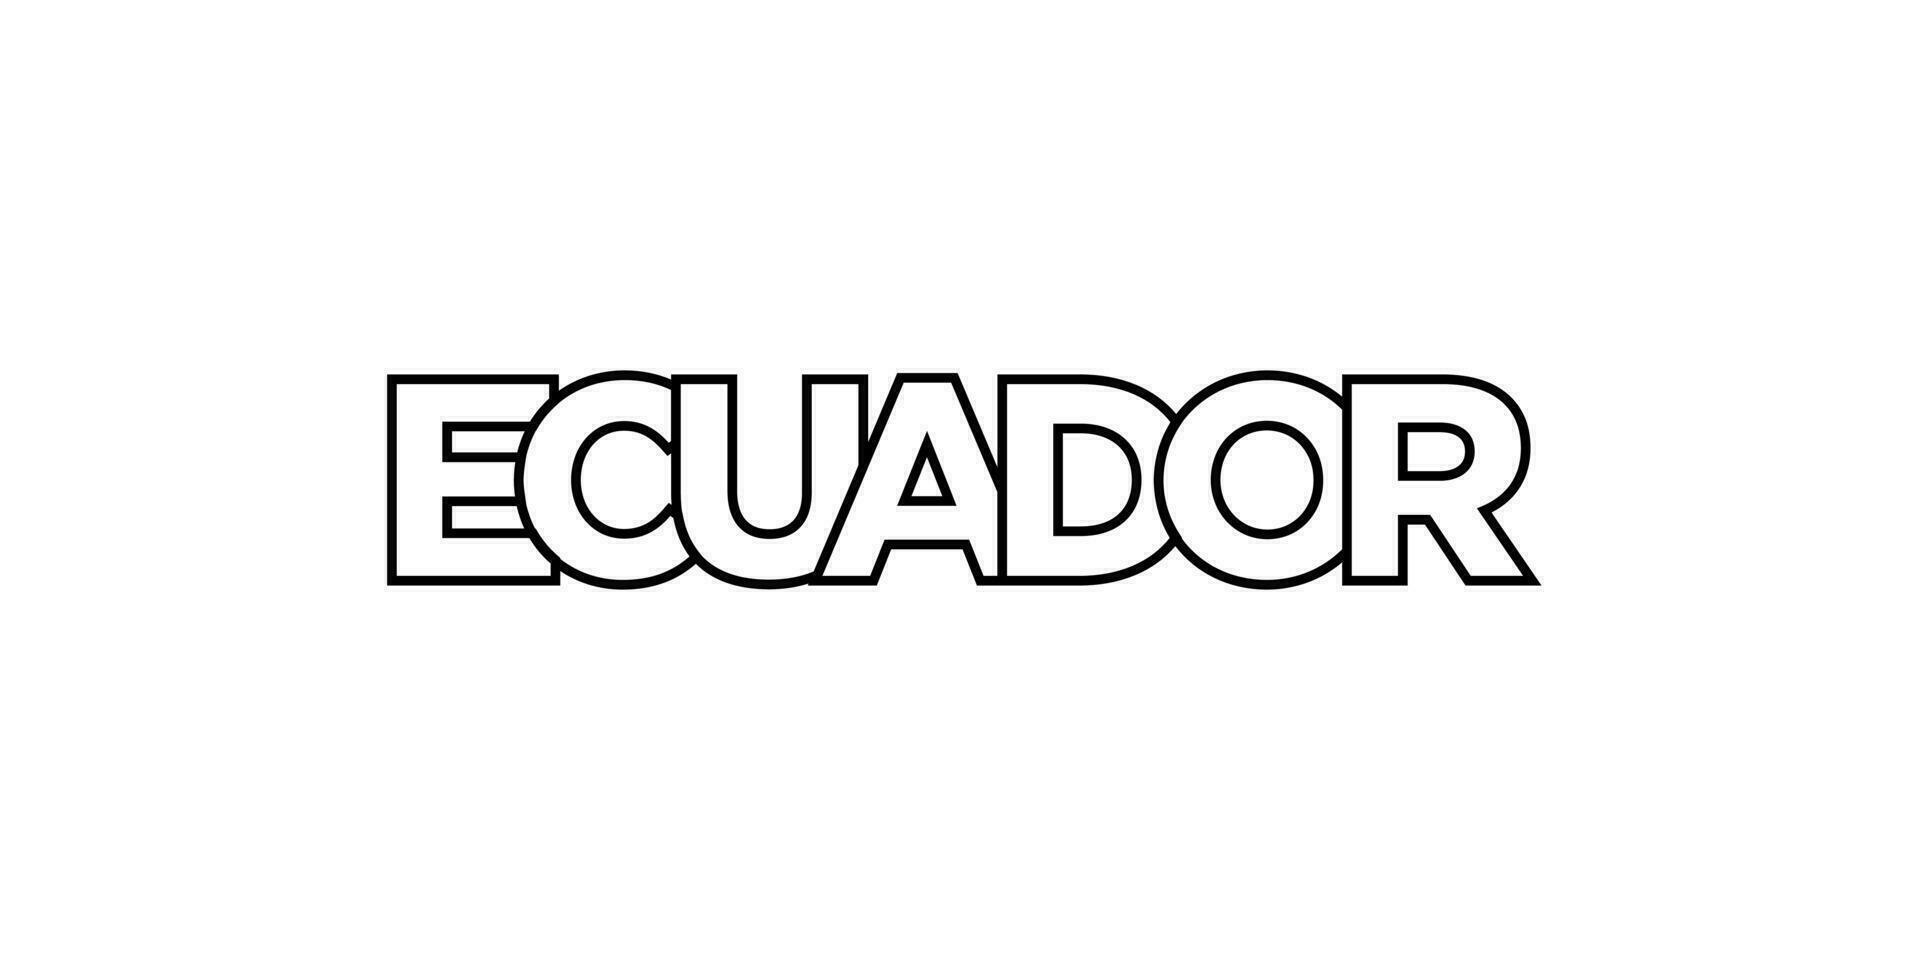 ecuador emblem. de design funktioner en geometrisk stil, vektor illustration med djärv typografi i en modern font. de grafisk slogan text.